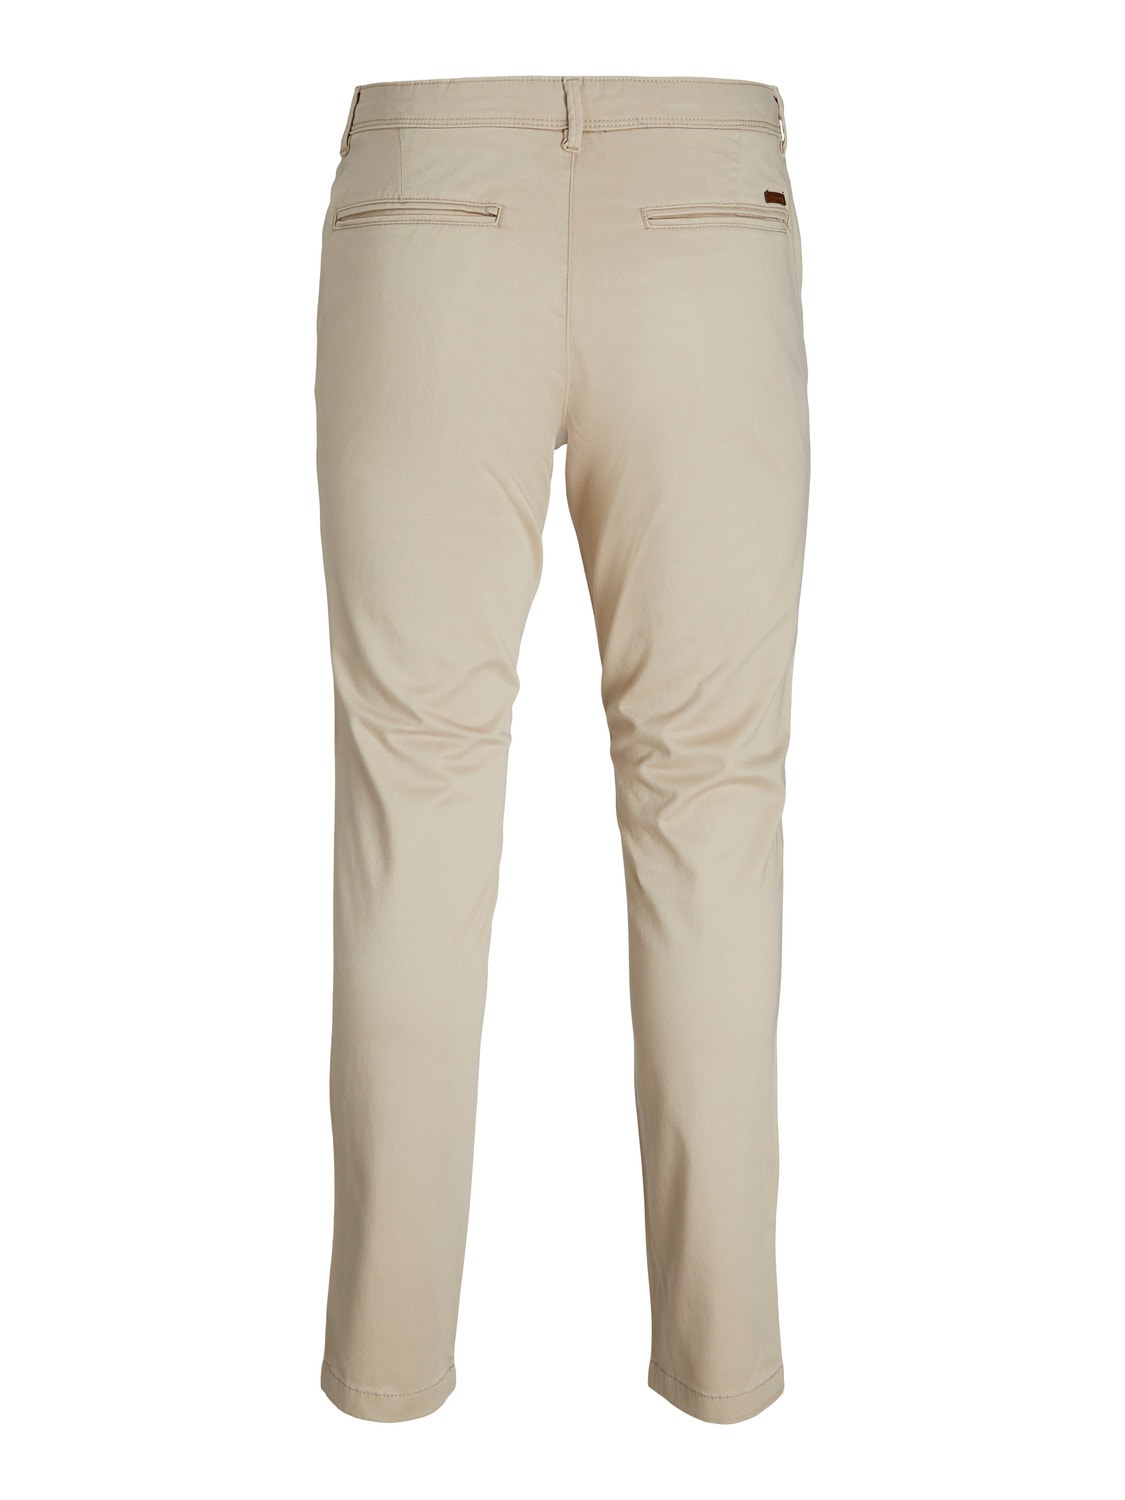 Jack & Jones Slim Fit Spodnie chino -Oxford Tan - 12150148